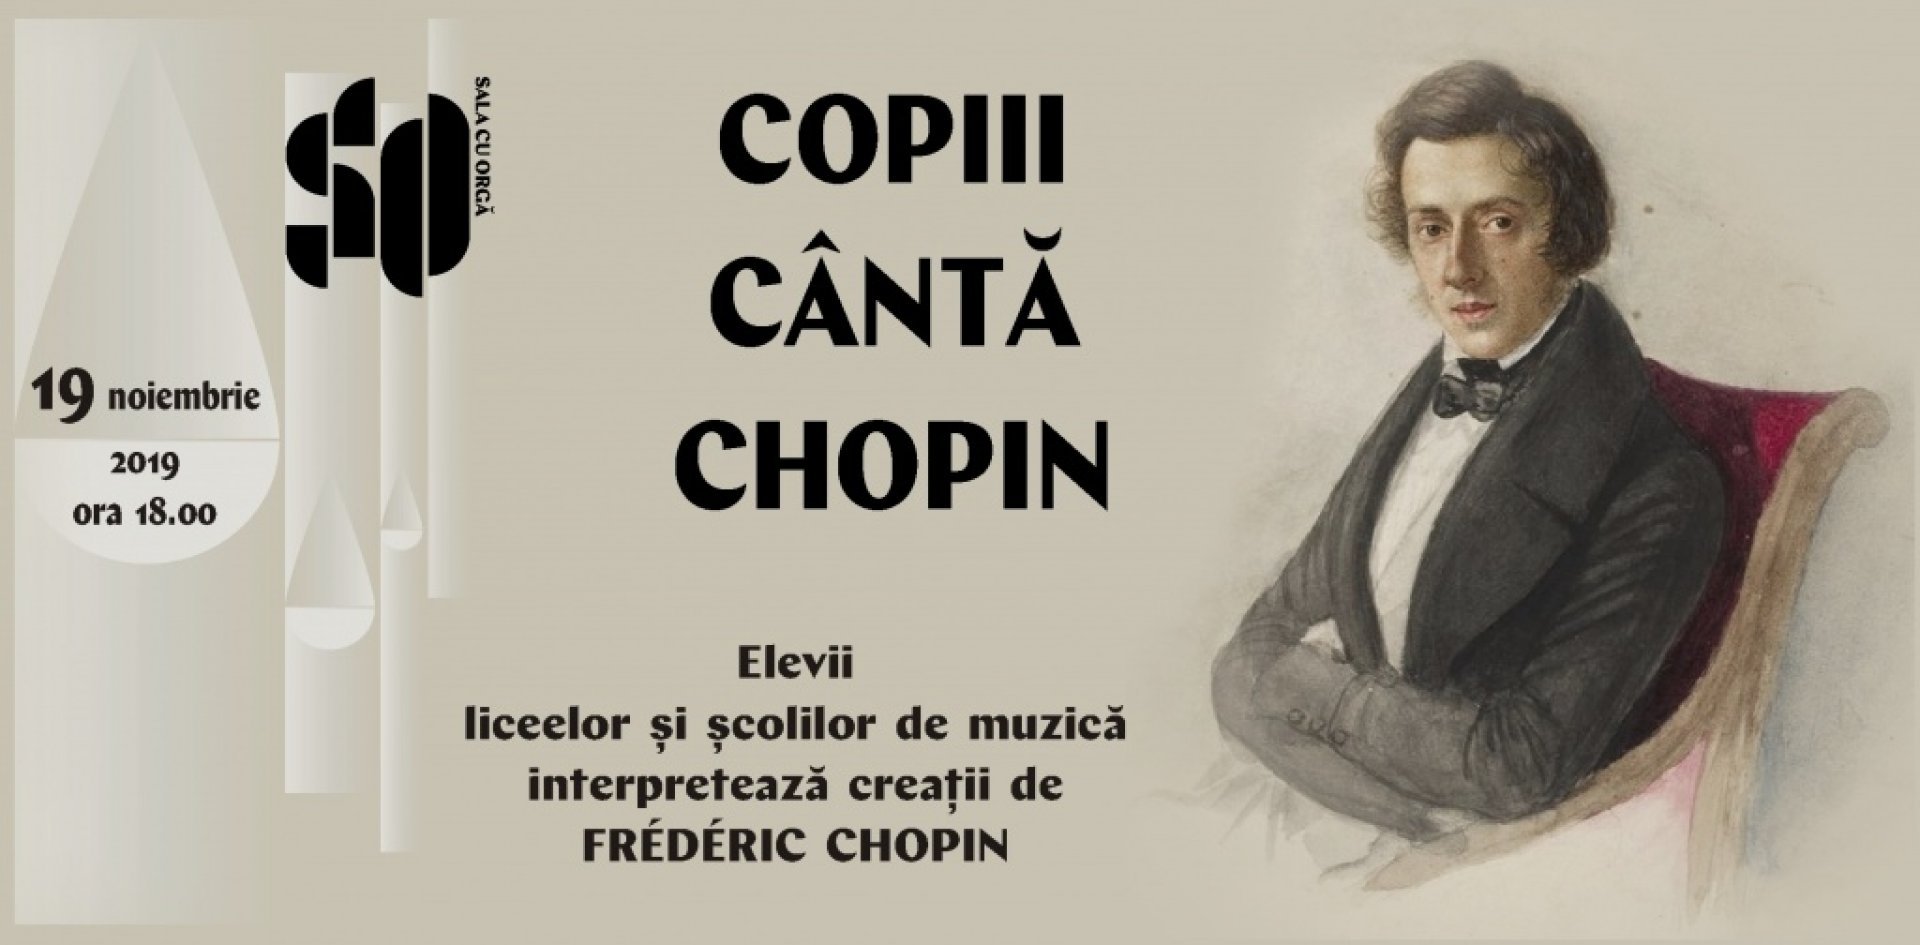 Copiii canta Chopin